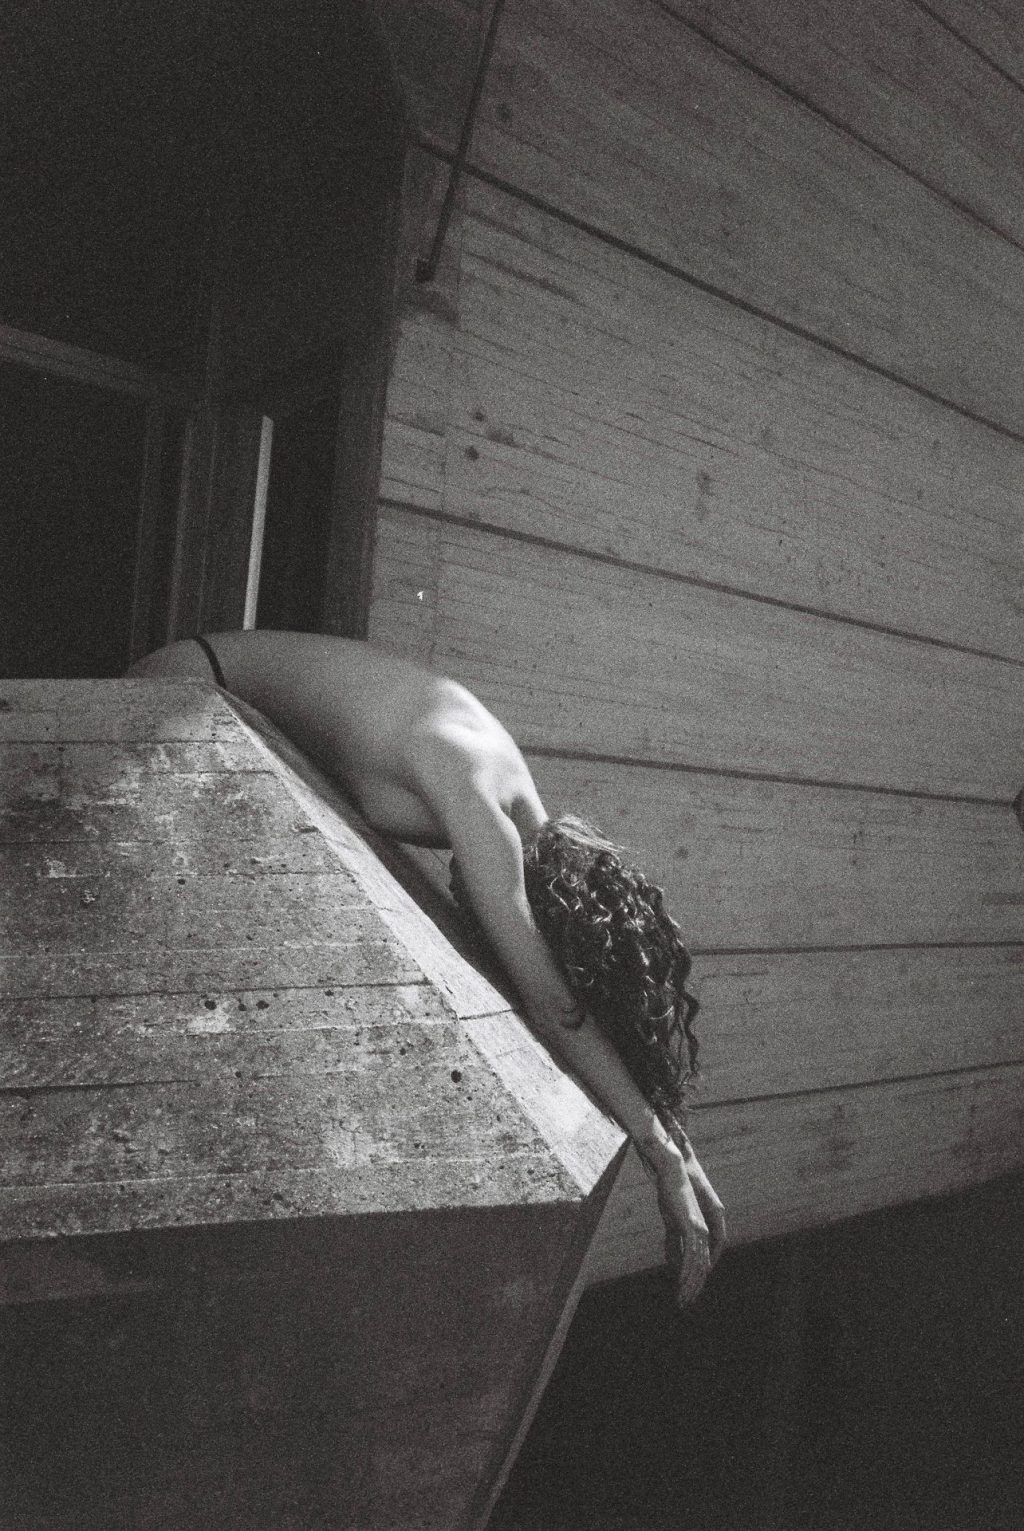 Rebecca Danon photoshoot photos nude model Instagram girl celebrity 